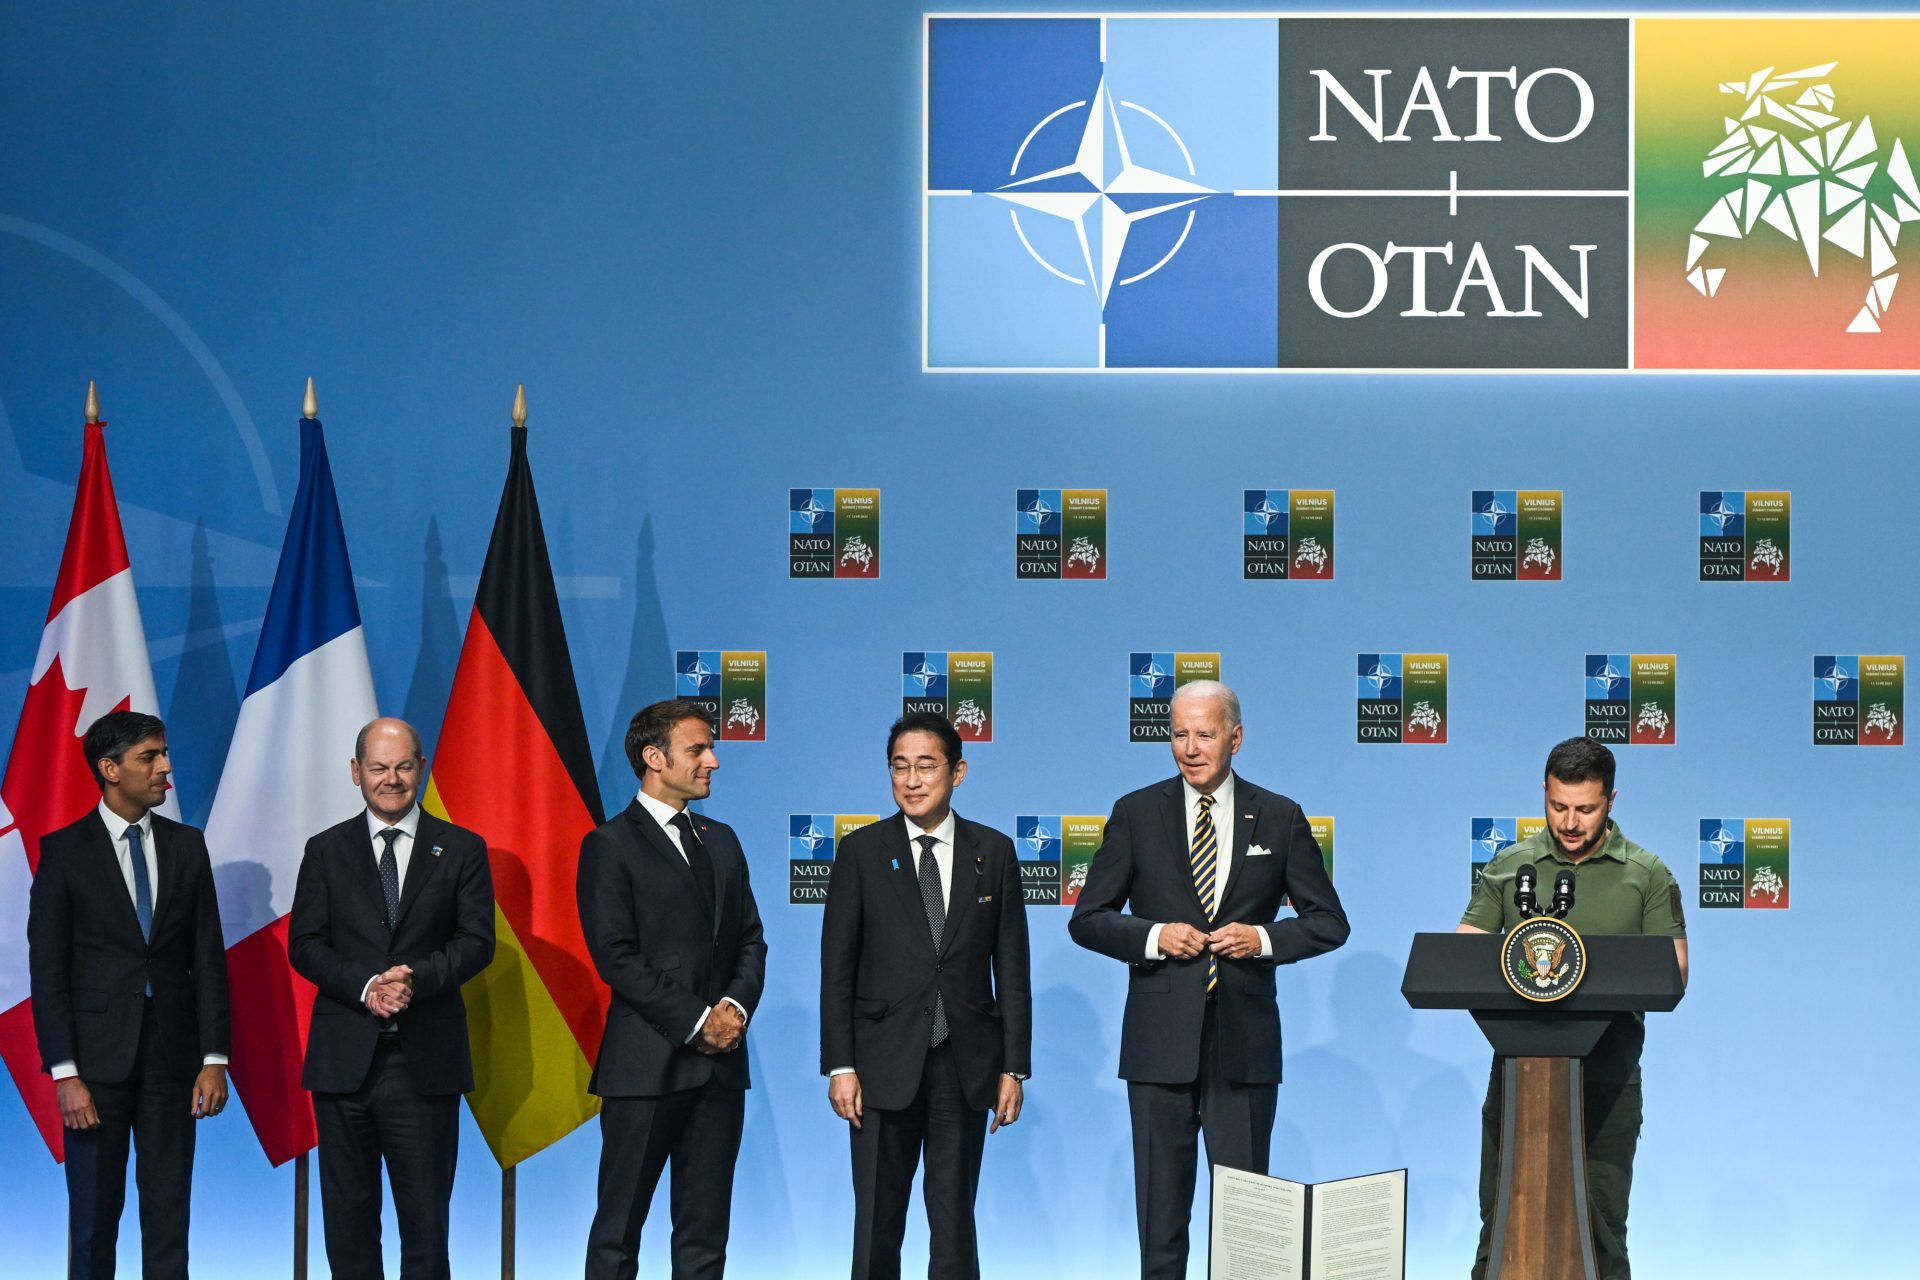 Putin is afraid of NATO